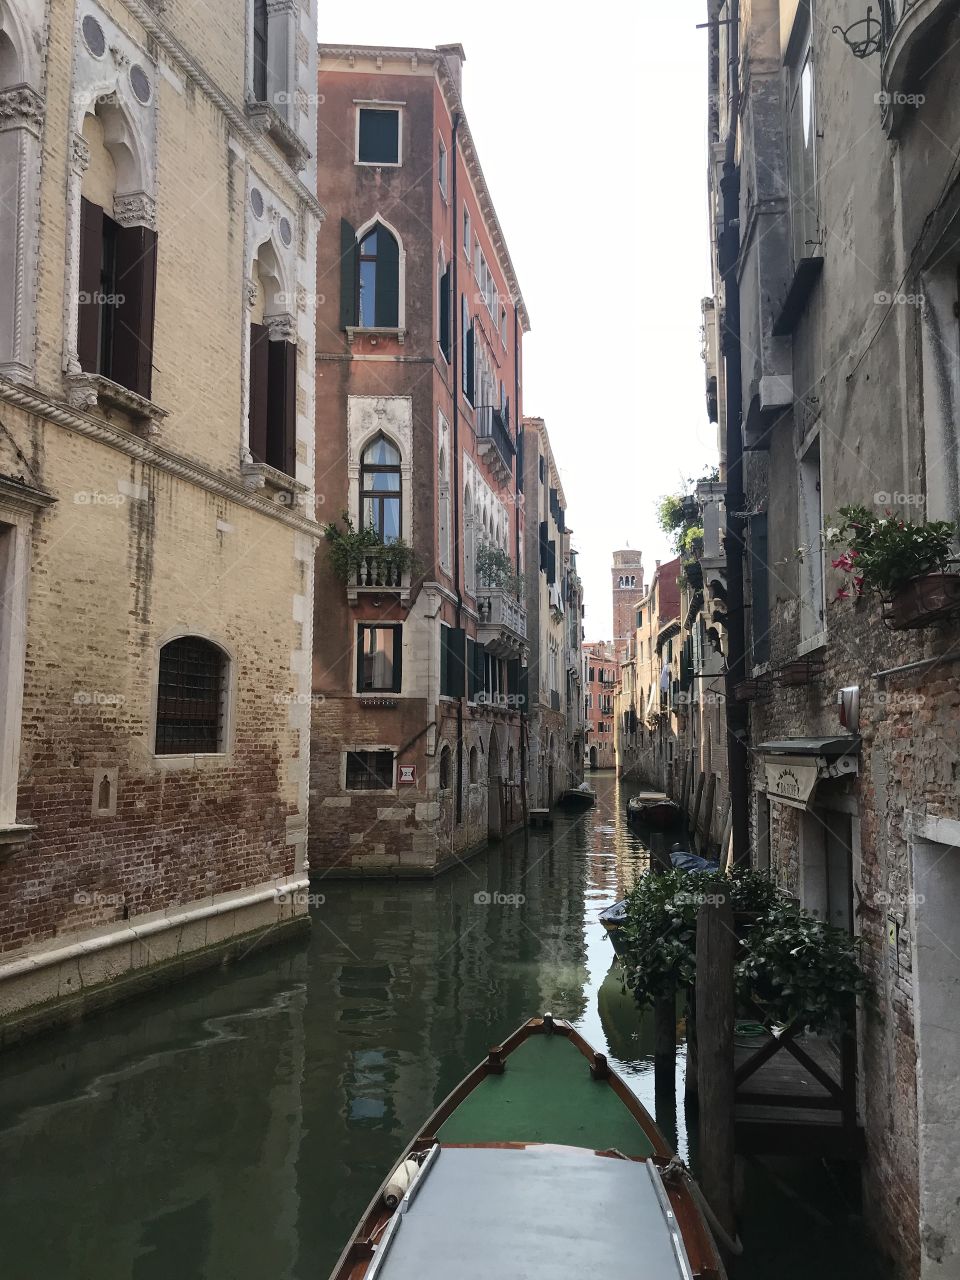 Canal, Gondola, Venetian, Architecture, Travel